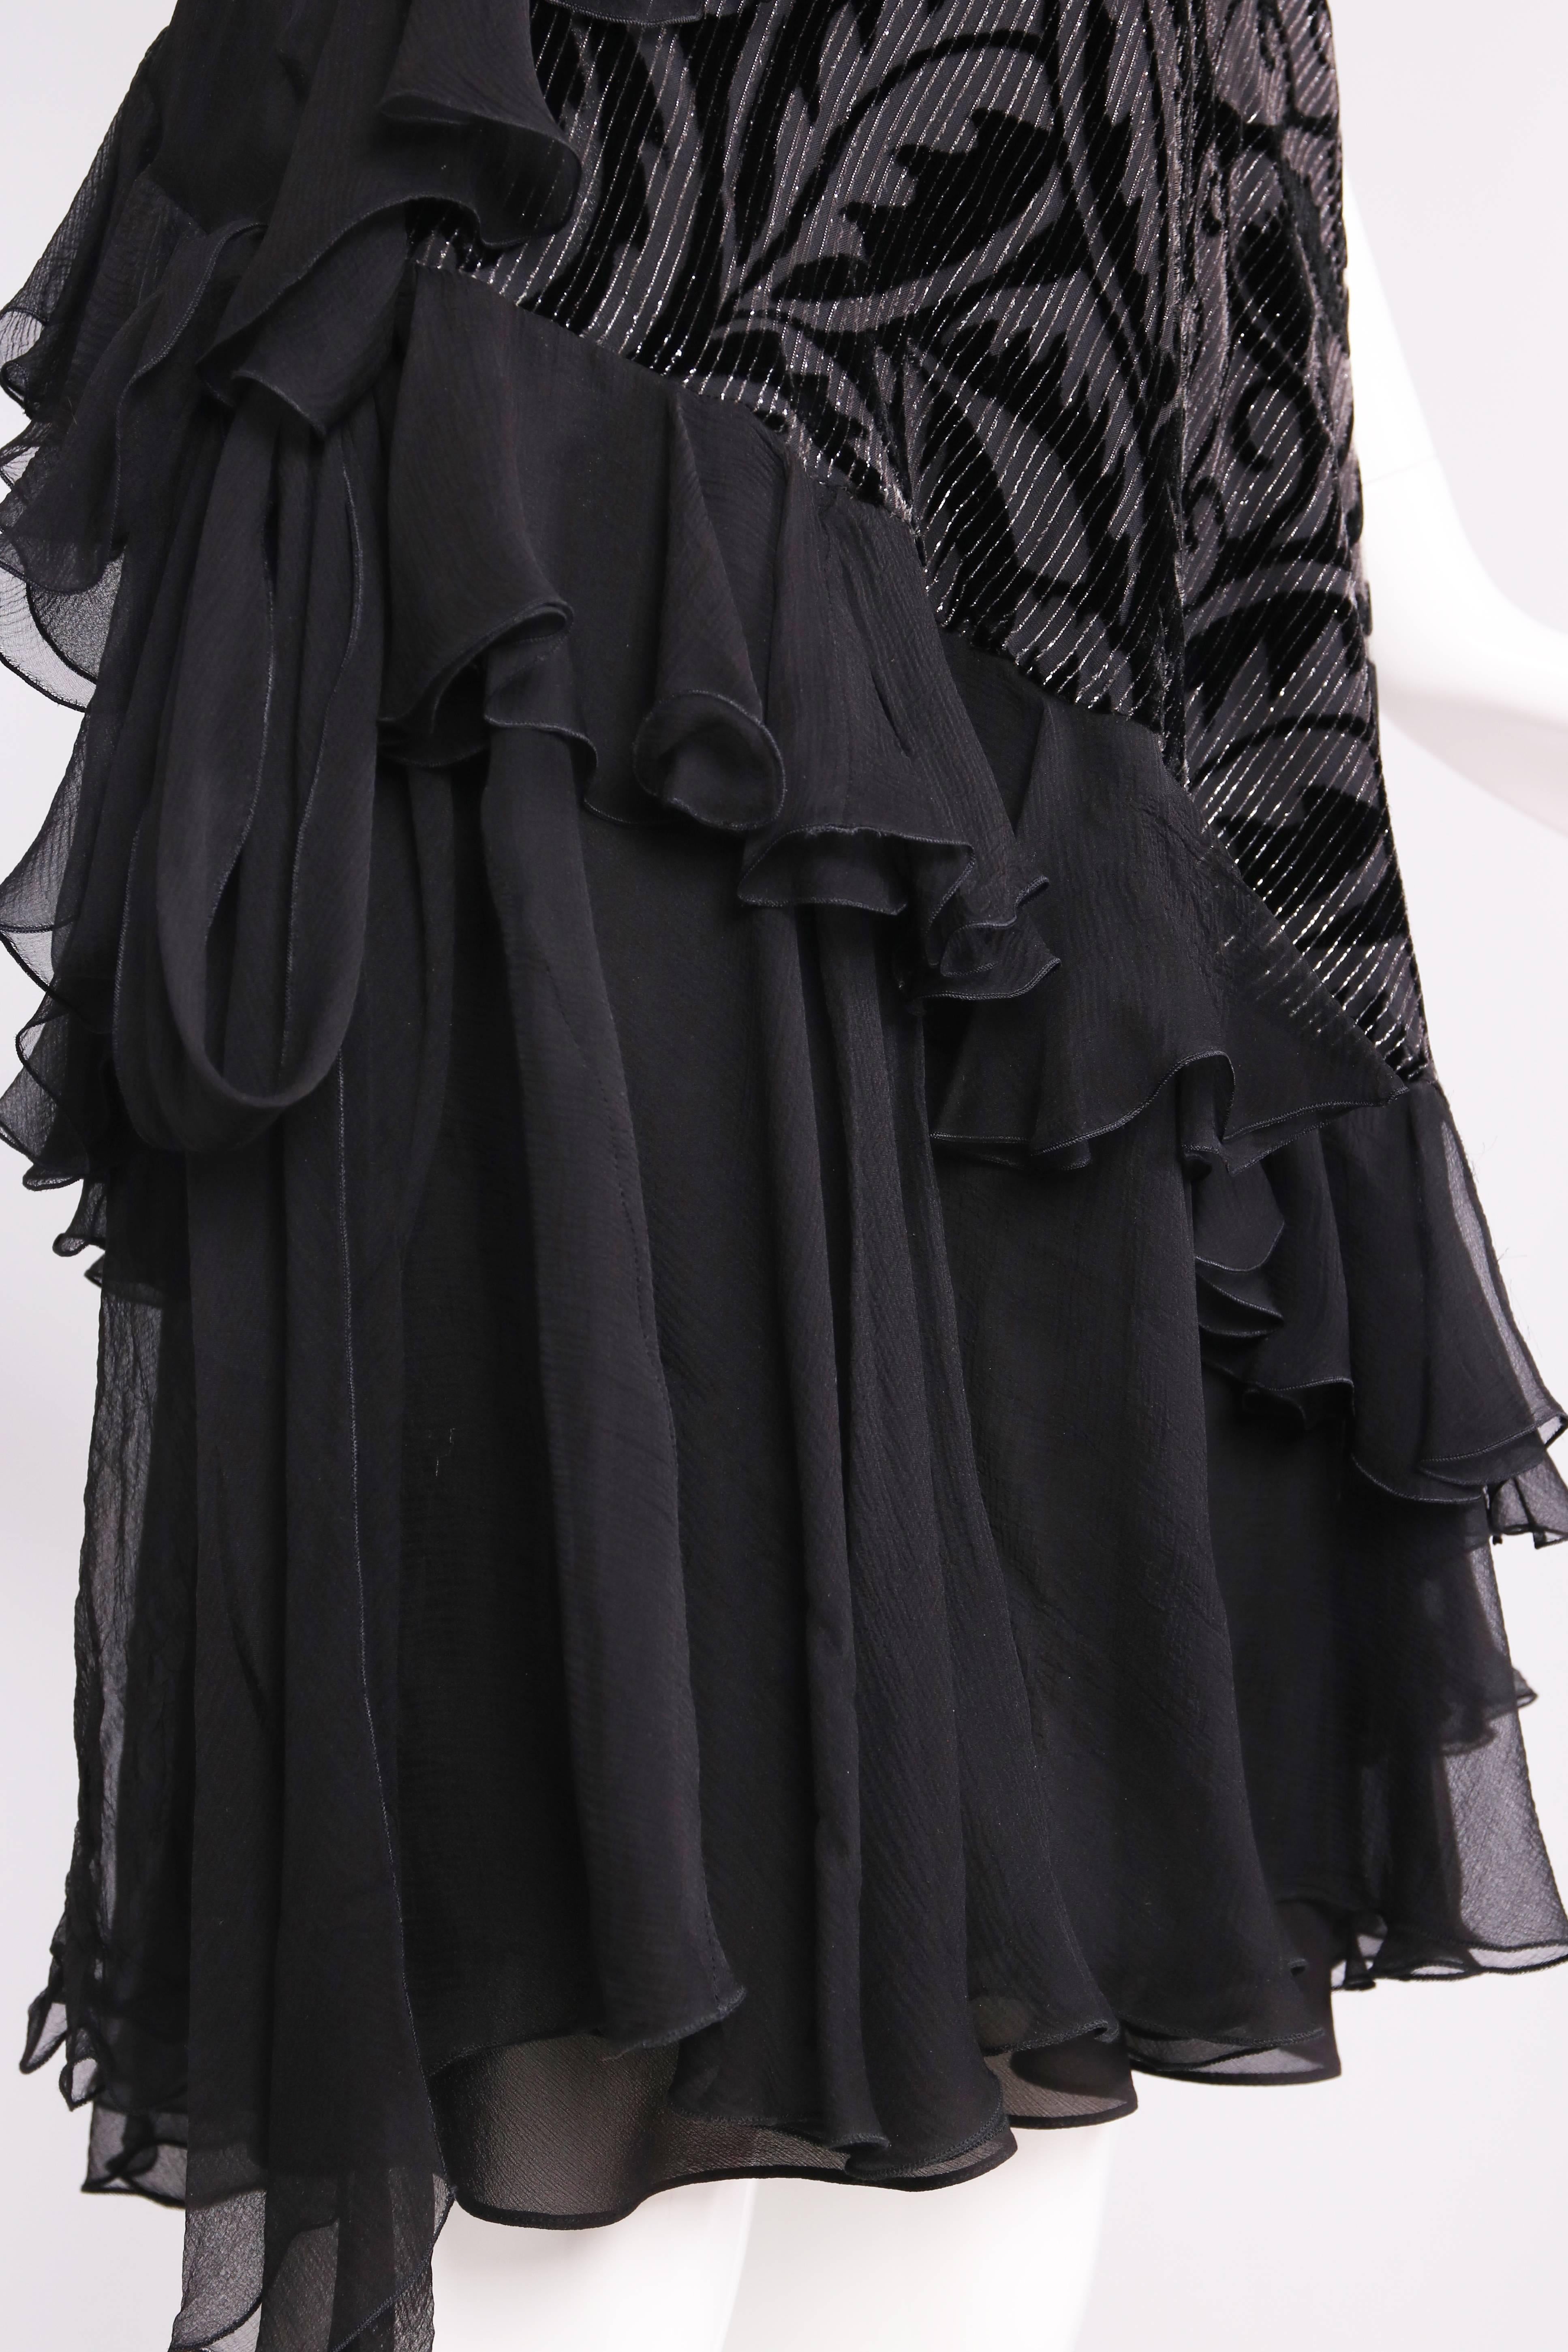 Women's Vintage John Galliano Black Silk & Velvet Bias Cut Cocktail Dress  For Sale